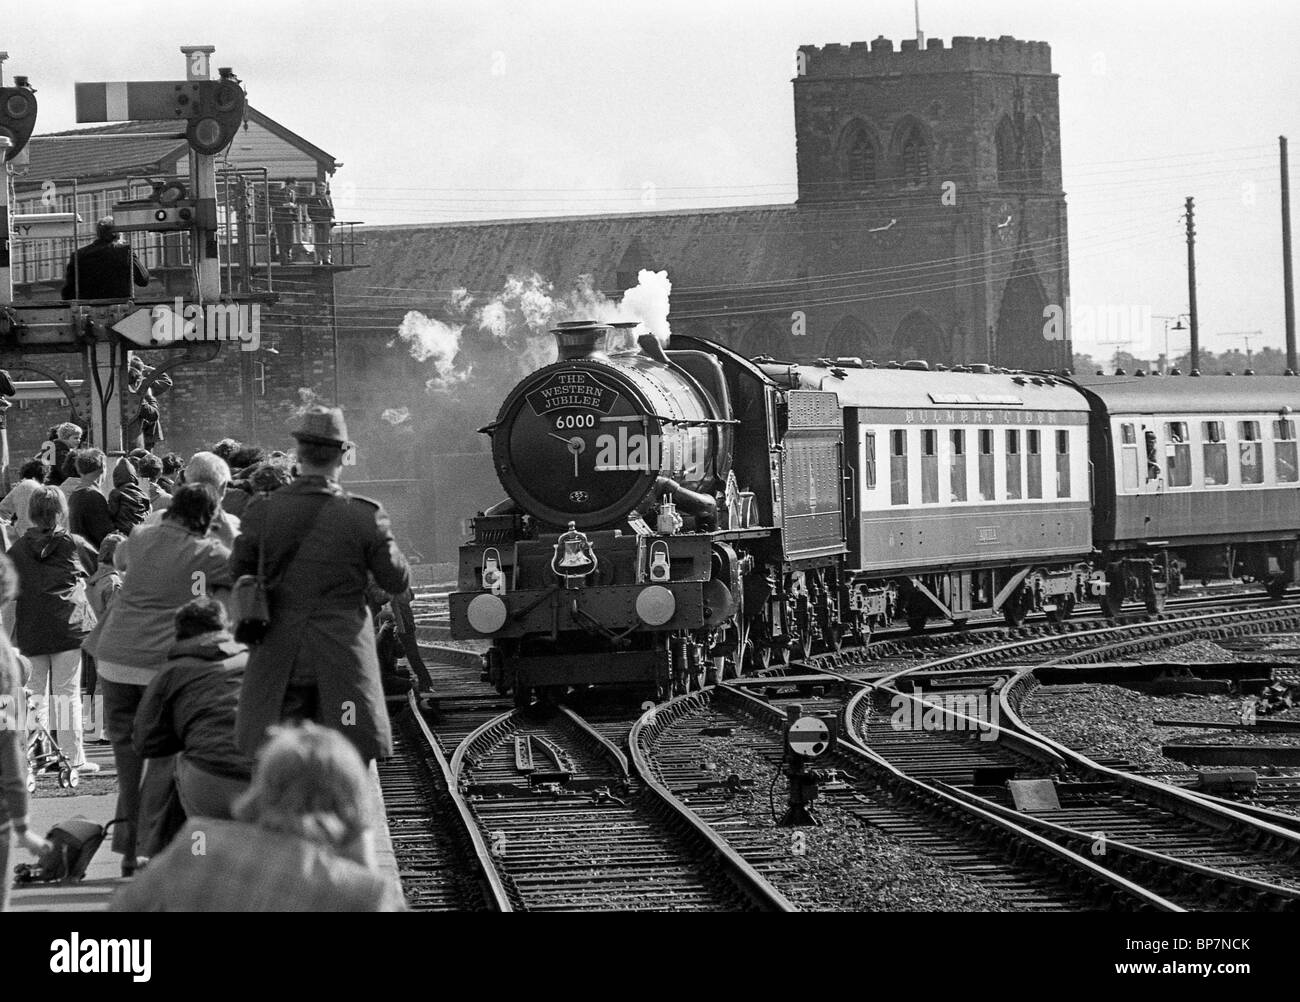 Shrewsbury station Black and White Stock Photos & Images - Alamy